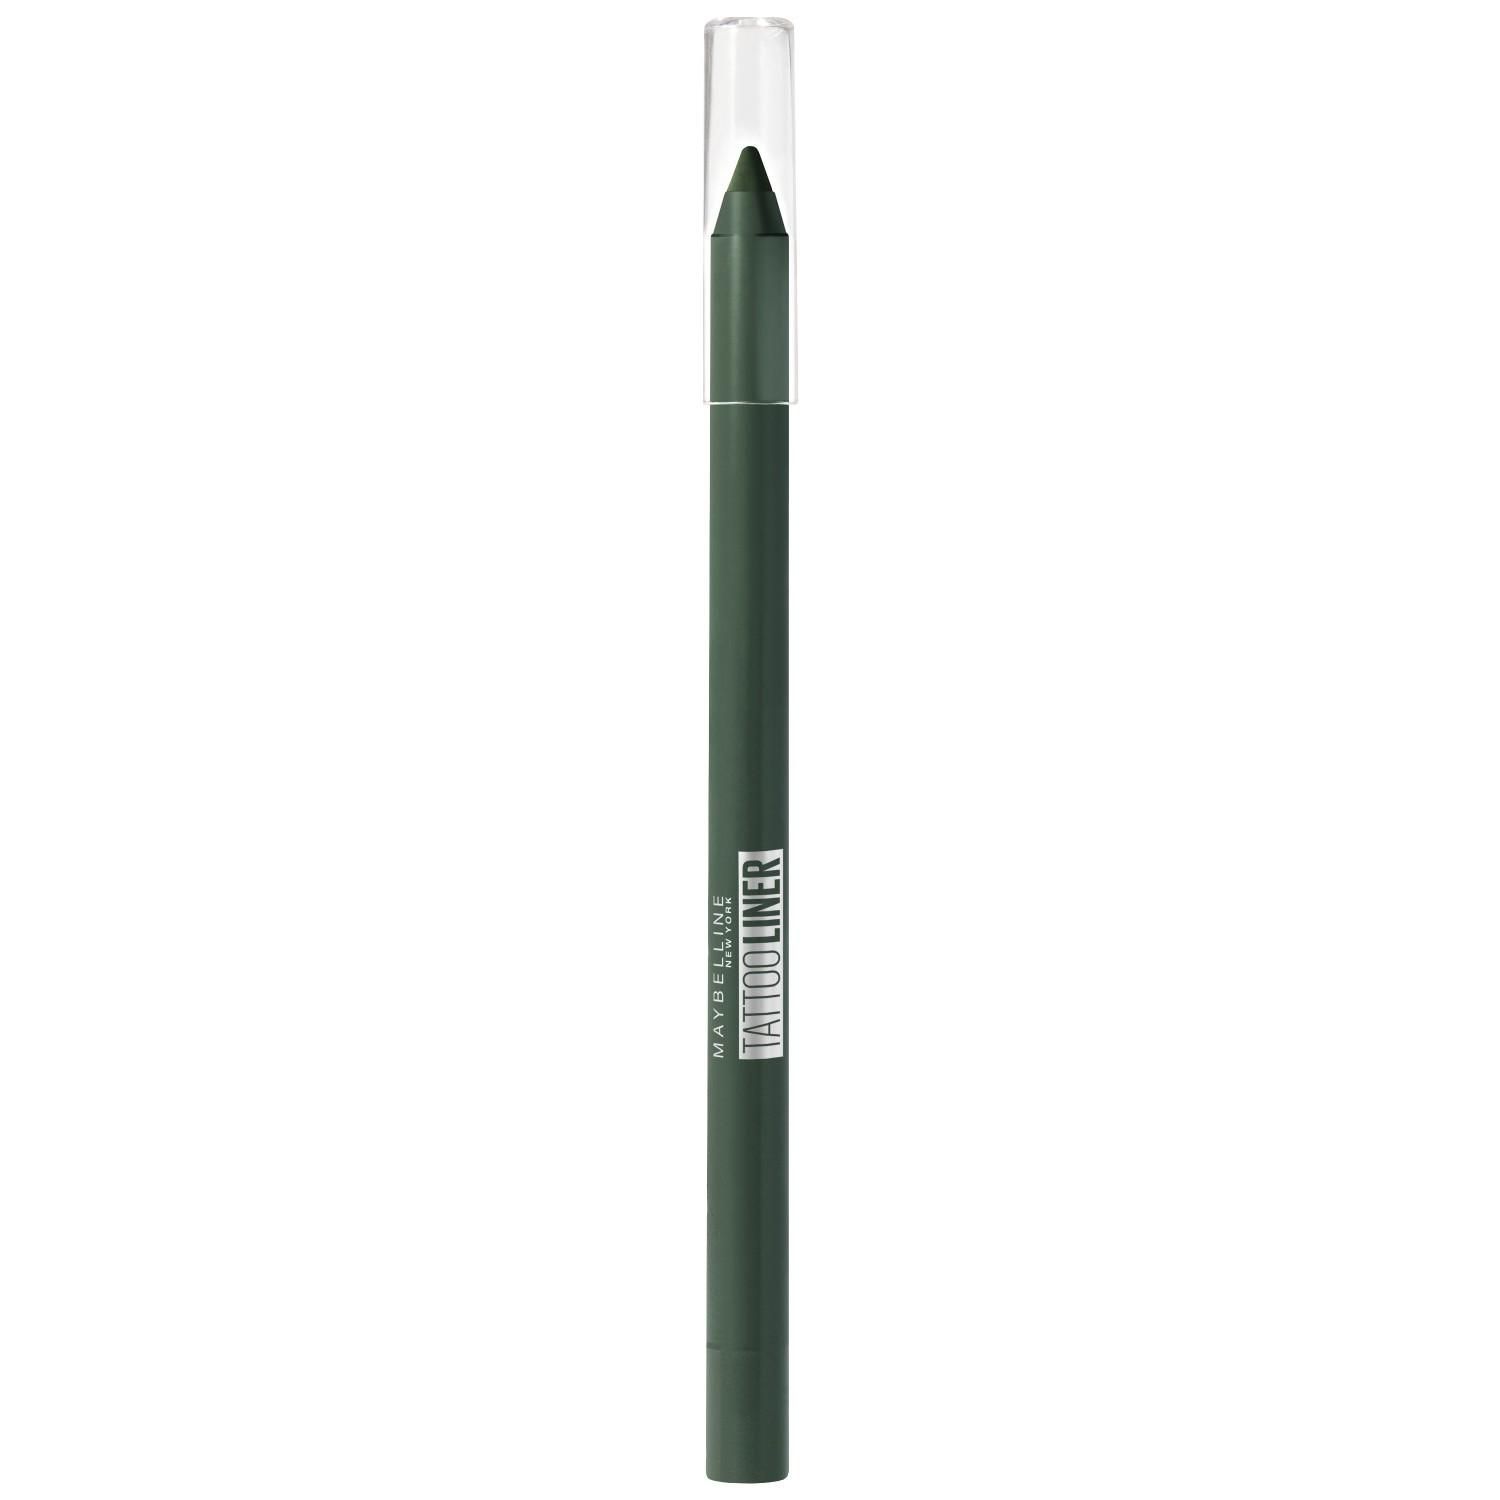 Maybelline New York карандаш для глаз Tattoo Liner, гелевый, оттенок 900, черный